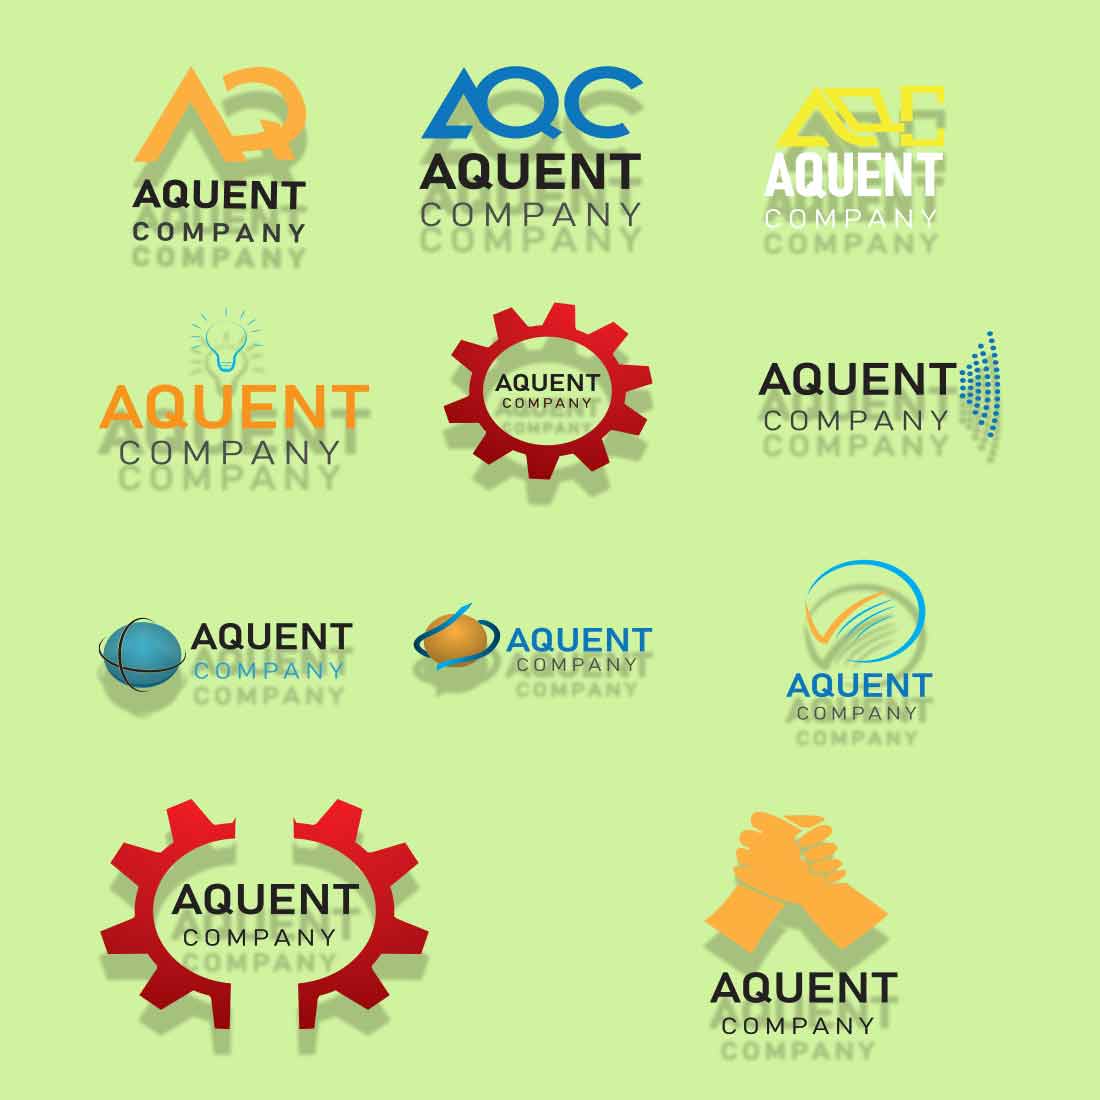 Aquent company logo preview image.